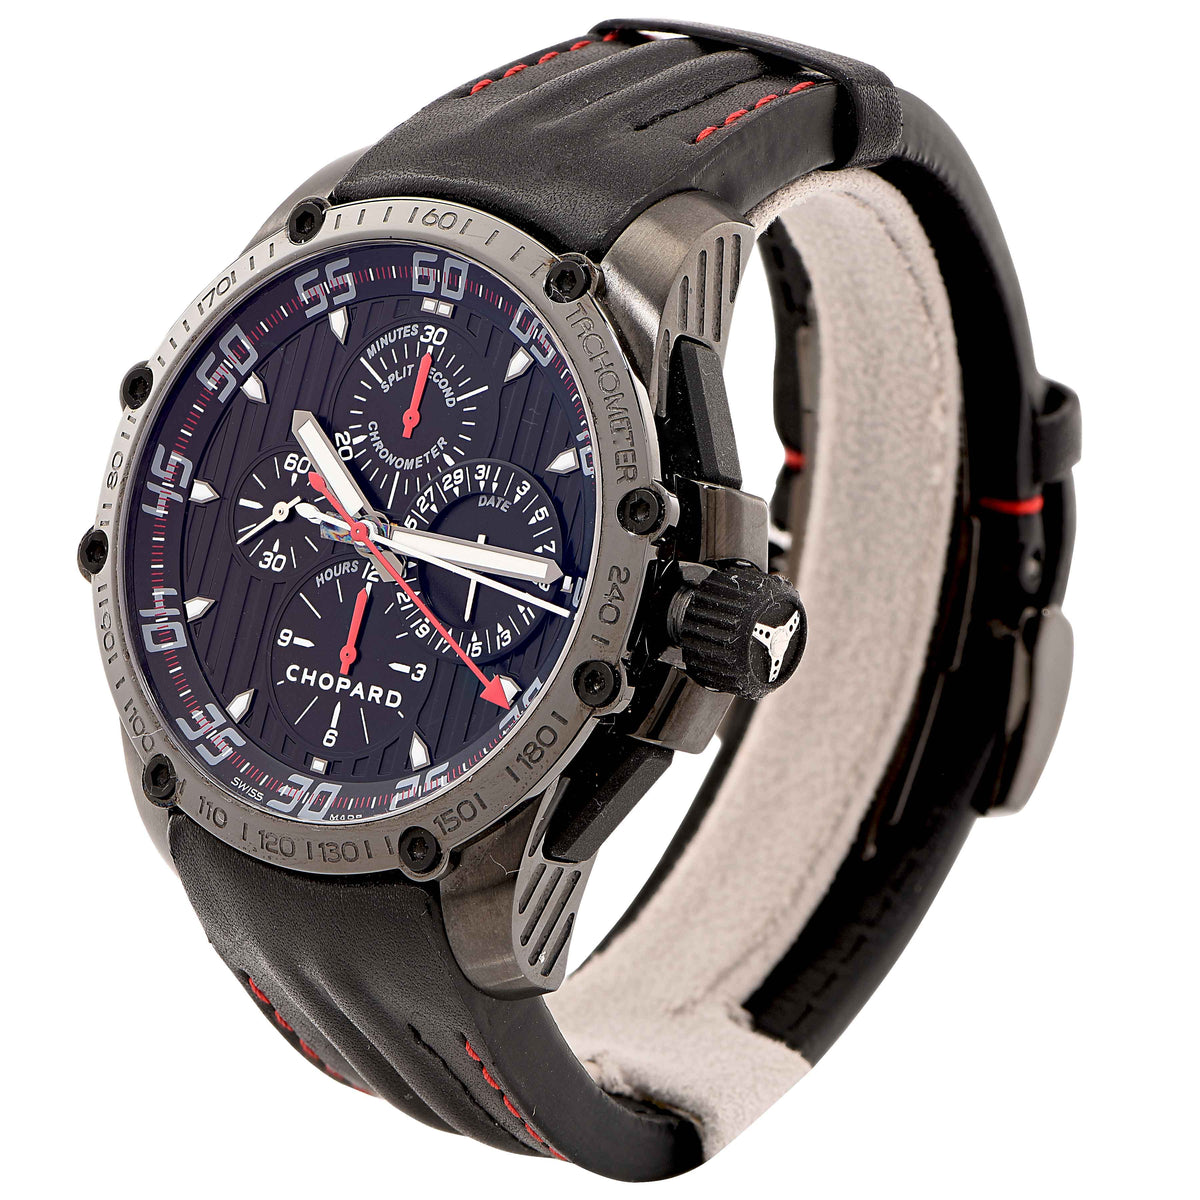 New Chopard Superfast Chrono Split Second Limited Edition Wristwatch